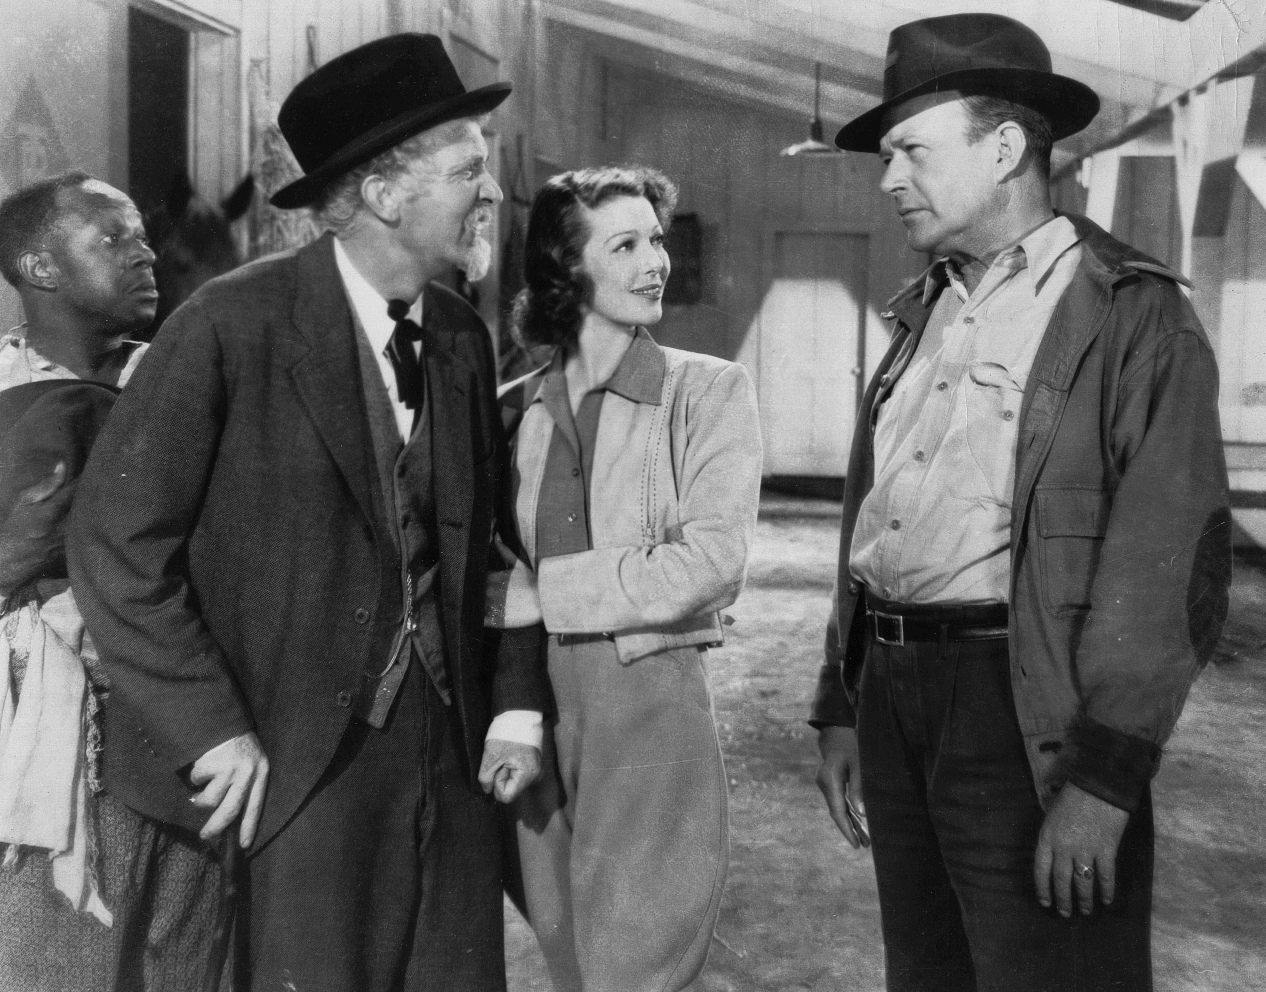 Eddie 'Rochester' Anderson در صحنه فیلم سینمایی Kentucky به همراه Walter Brennan، Loretta Young و Willard Robertson